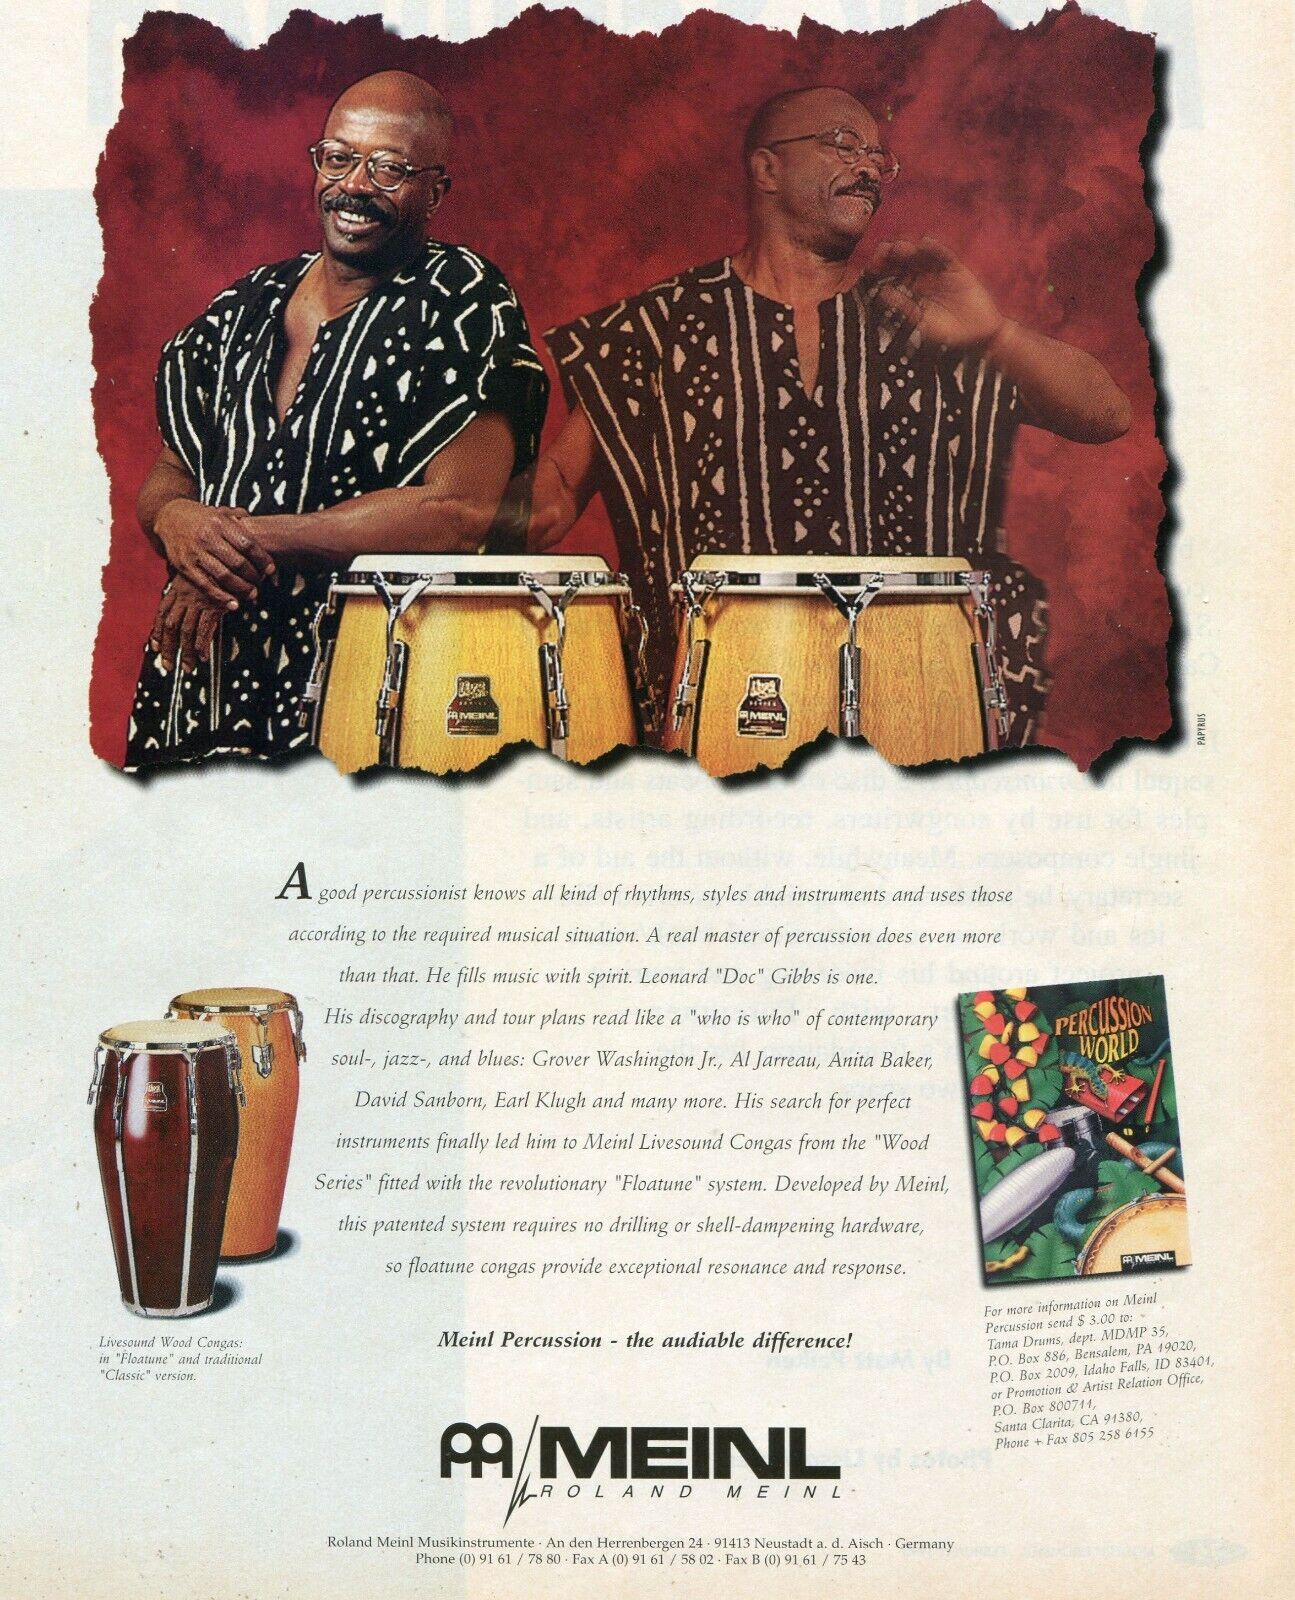 1995 Print Ad of Roland Meinl Livesound Wood Congas w Leonard Doc Gibbs